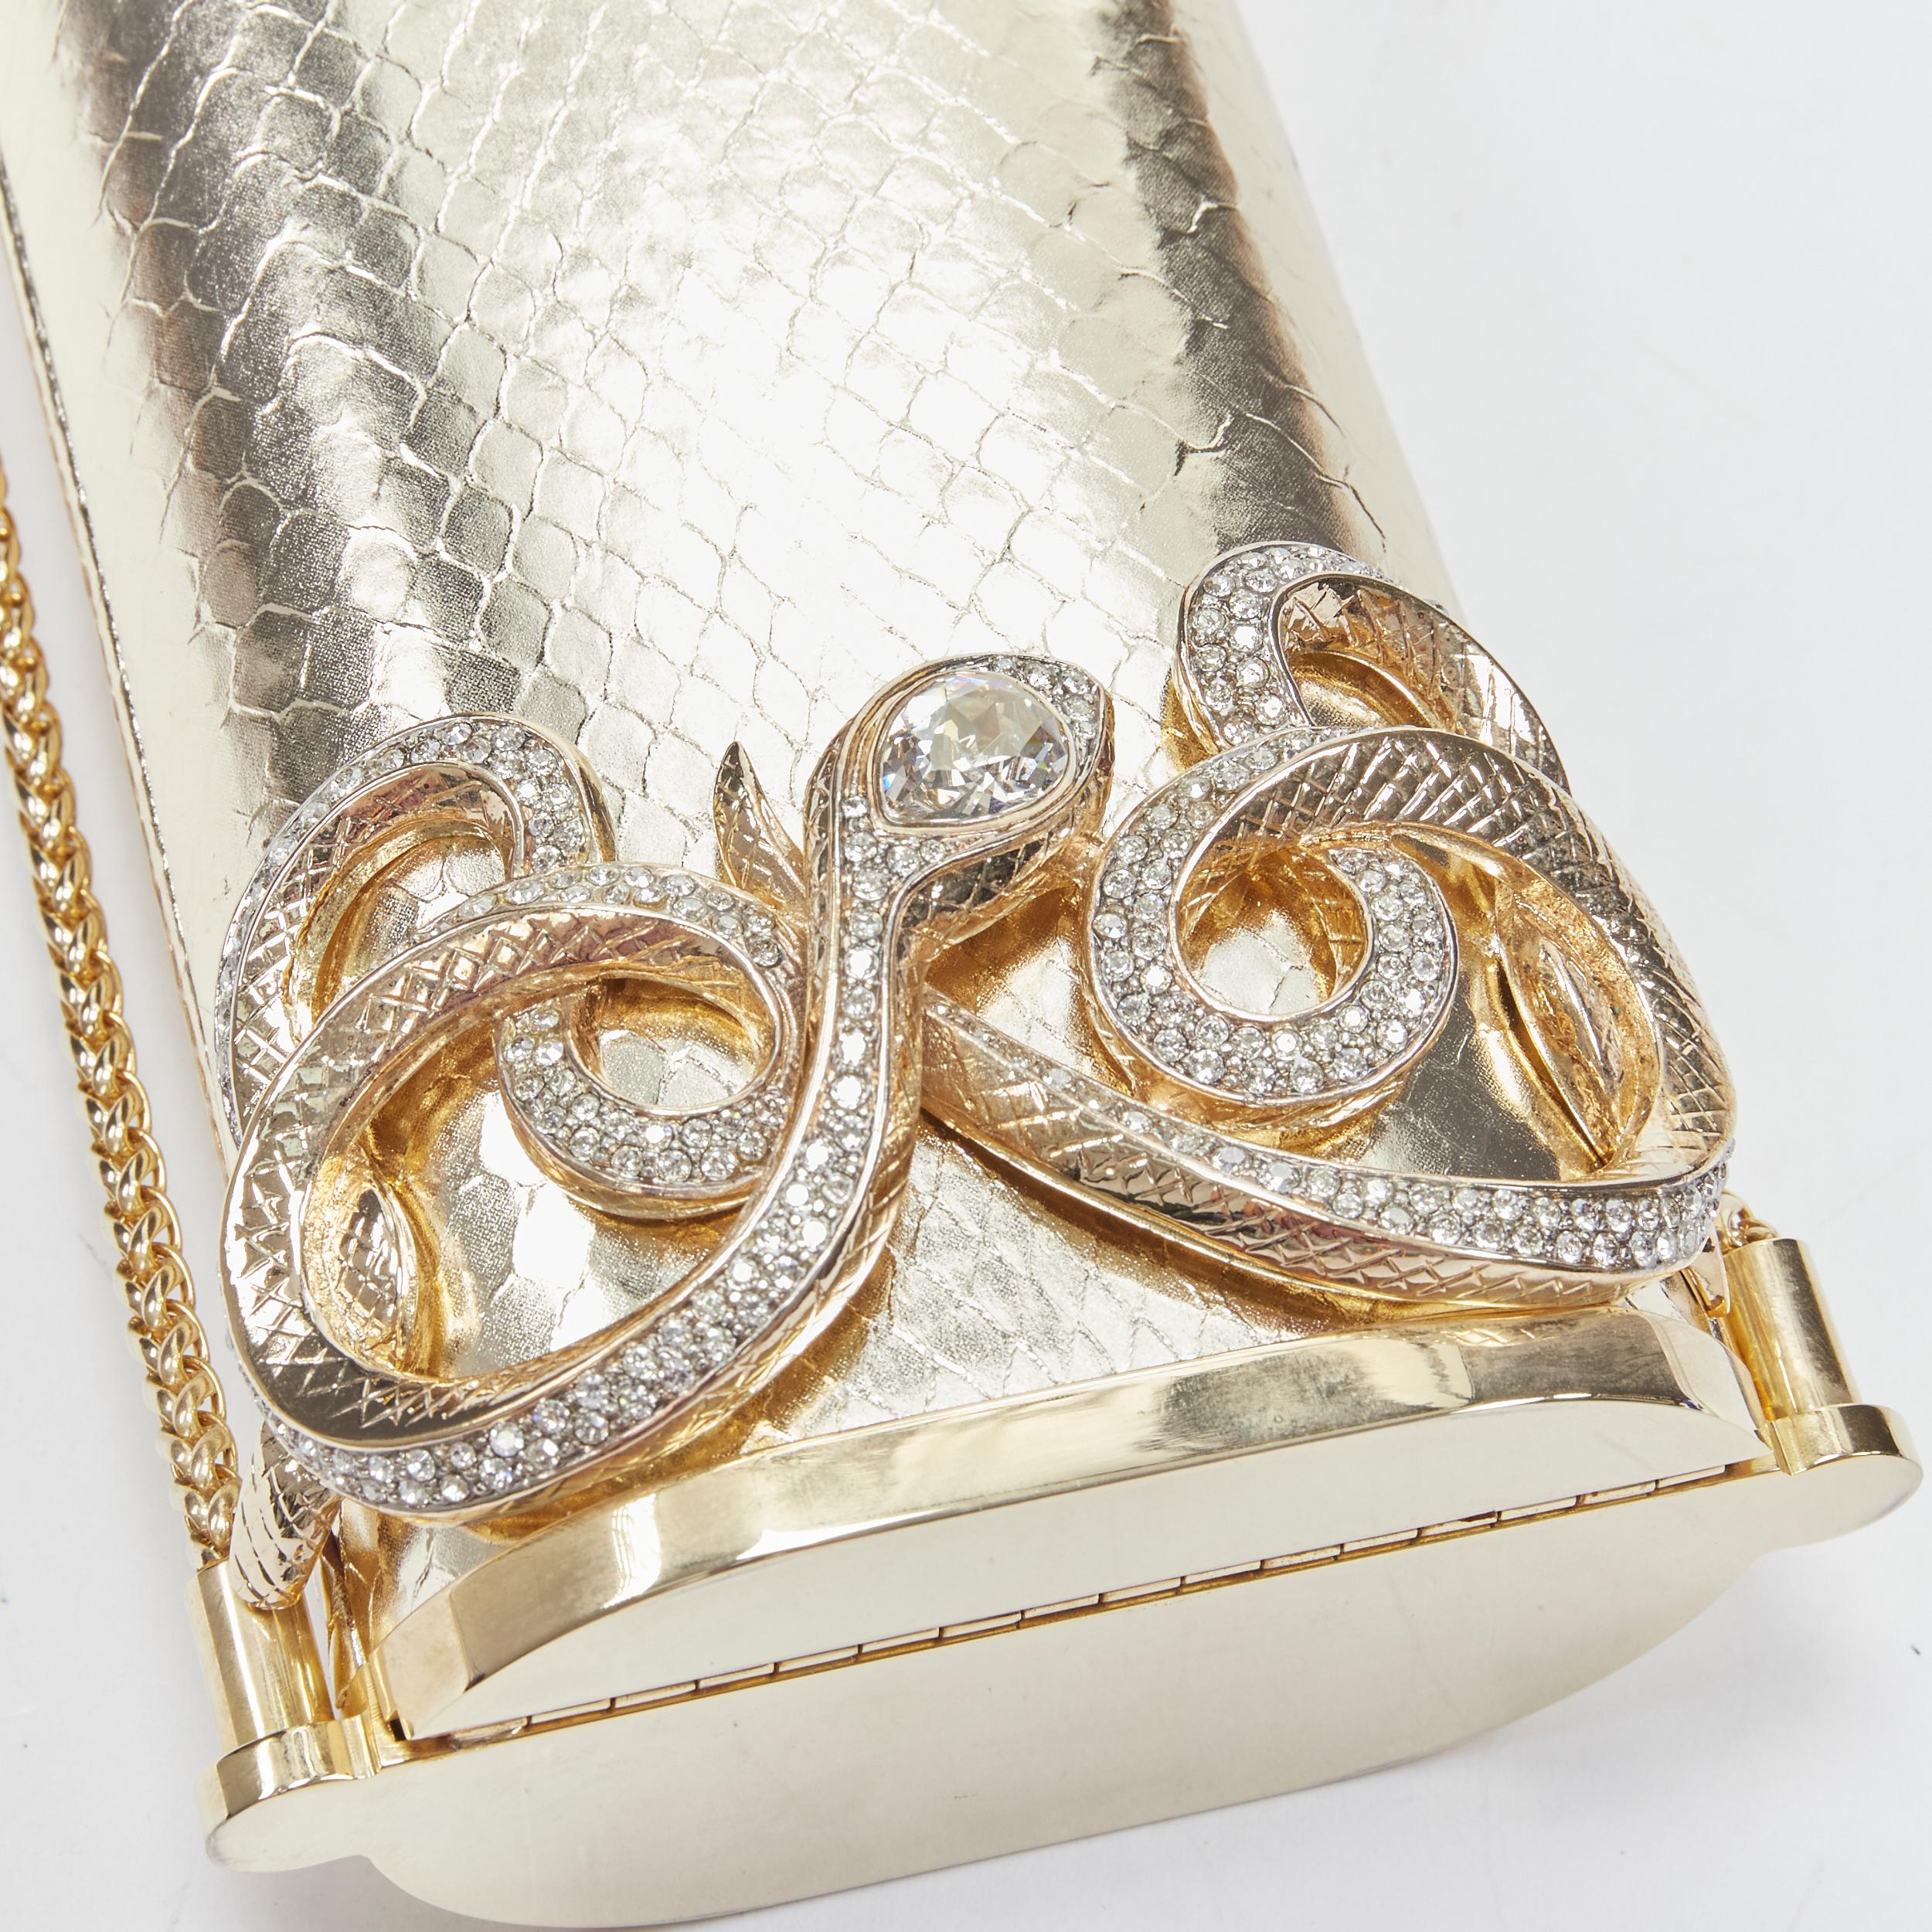 ROBERTO CAVALLI metallic gold leather crystal Serpent snake chain box clutch 3